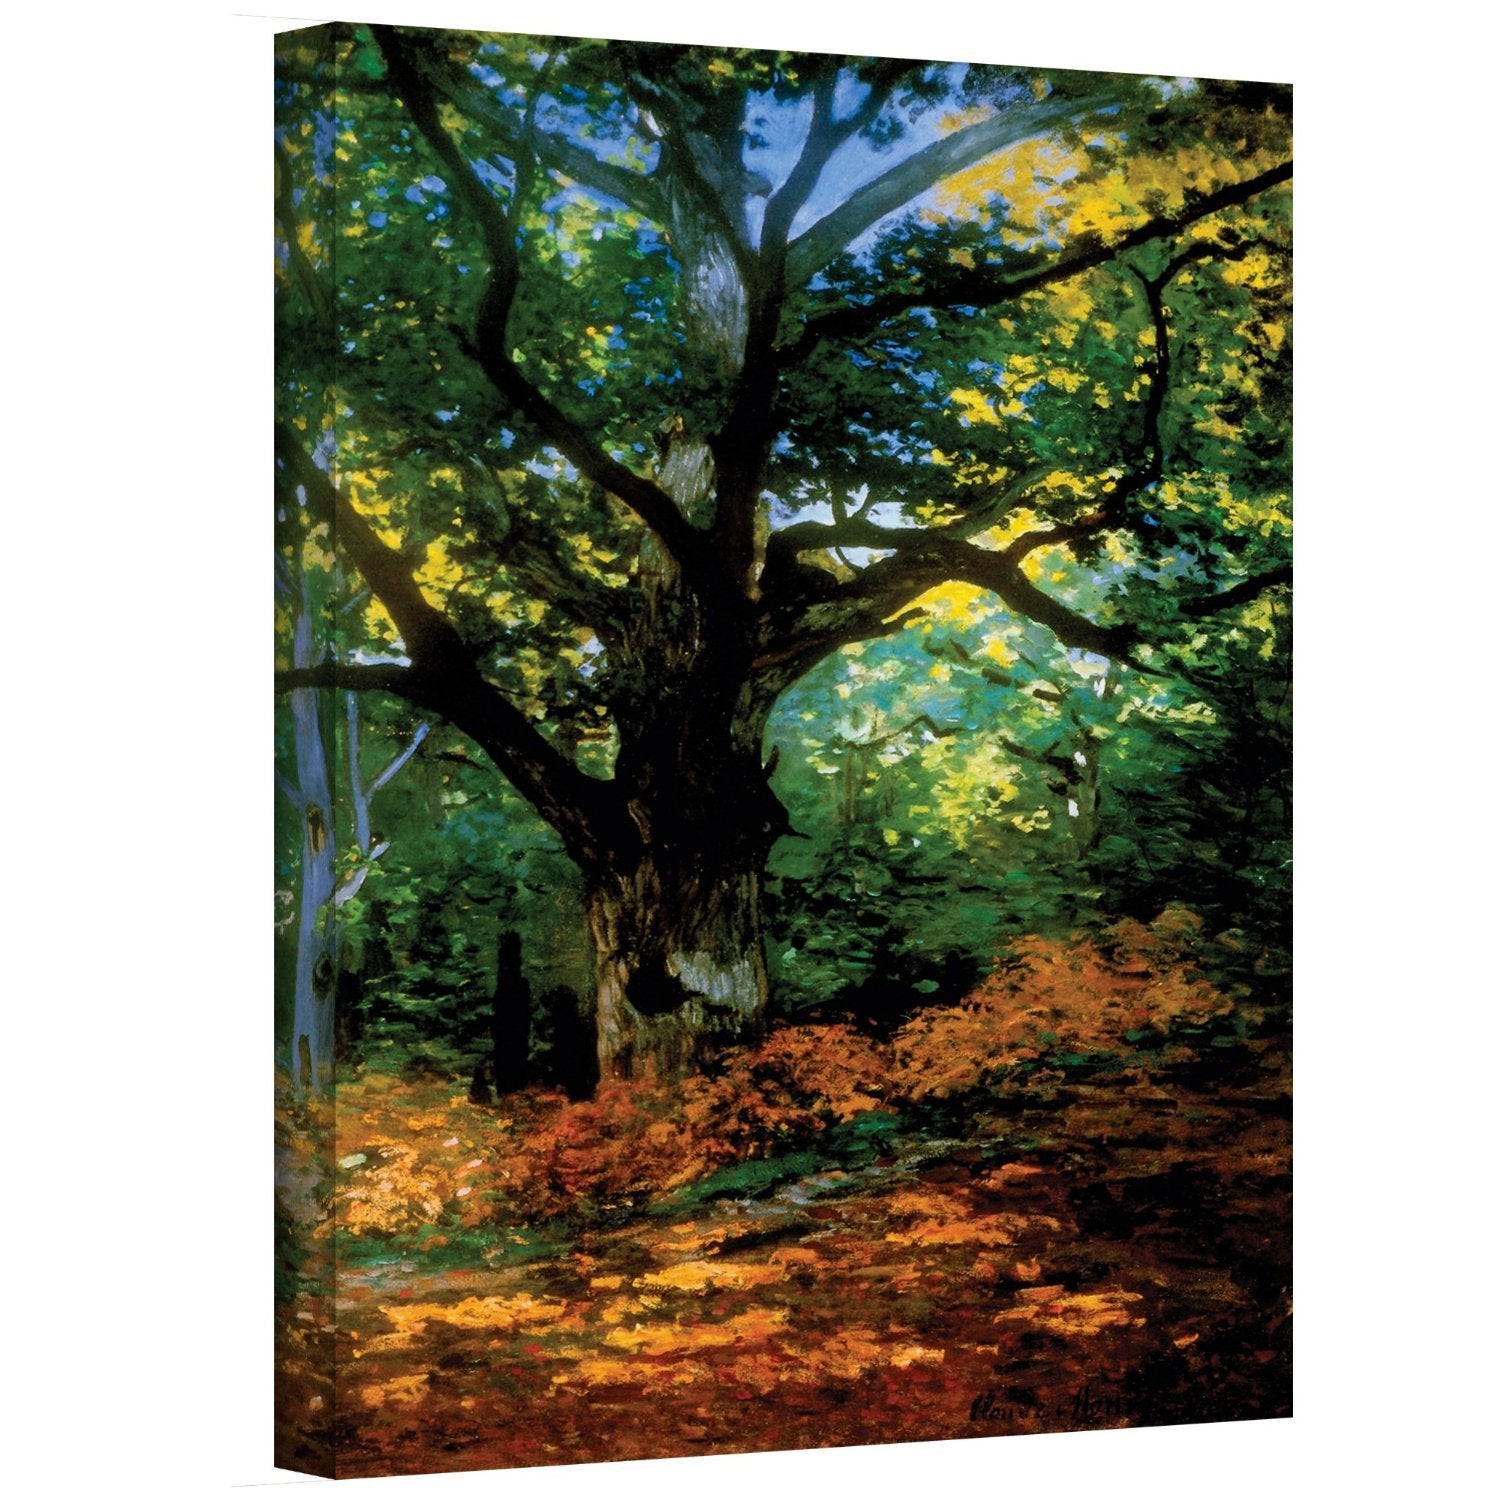 Claude Monet, "Bodmer Oak at Fountainbleau Forest" 12" x 18" x 1.5" Canvas Gallery Wrap Print